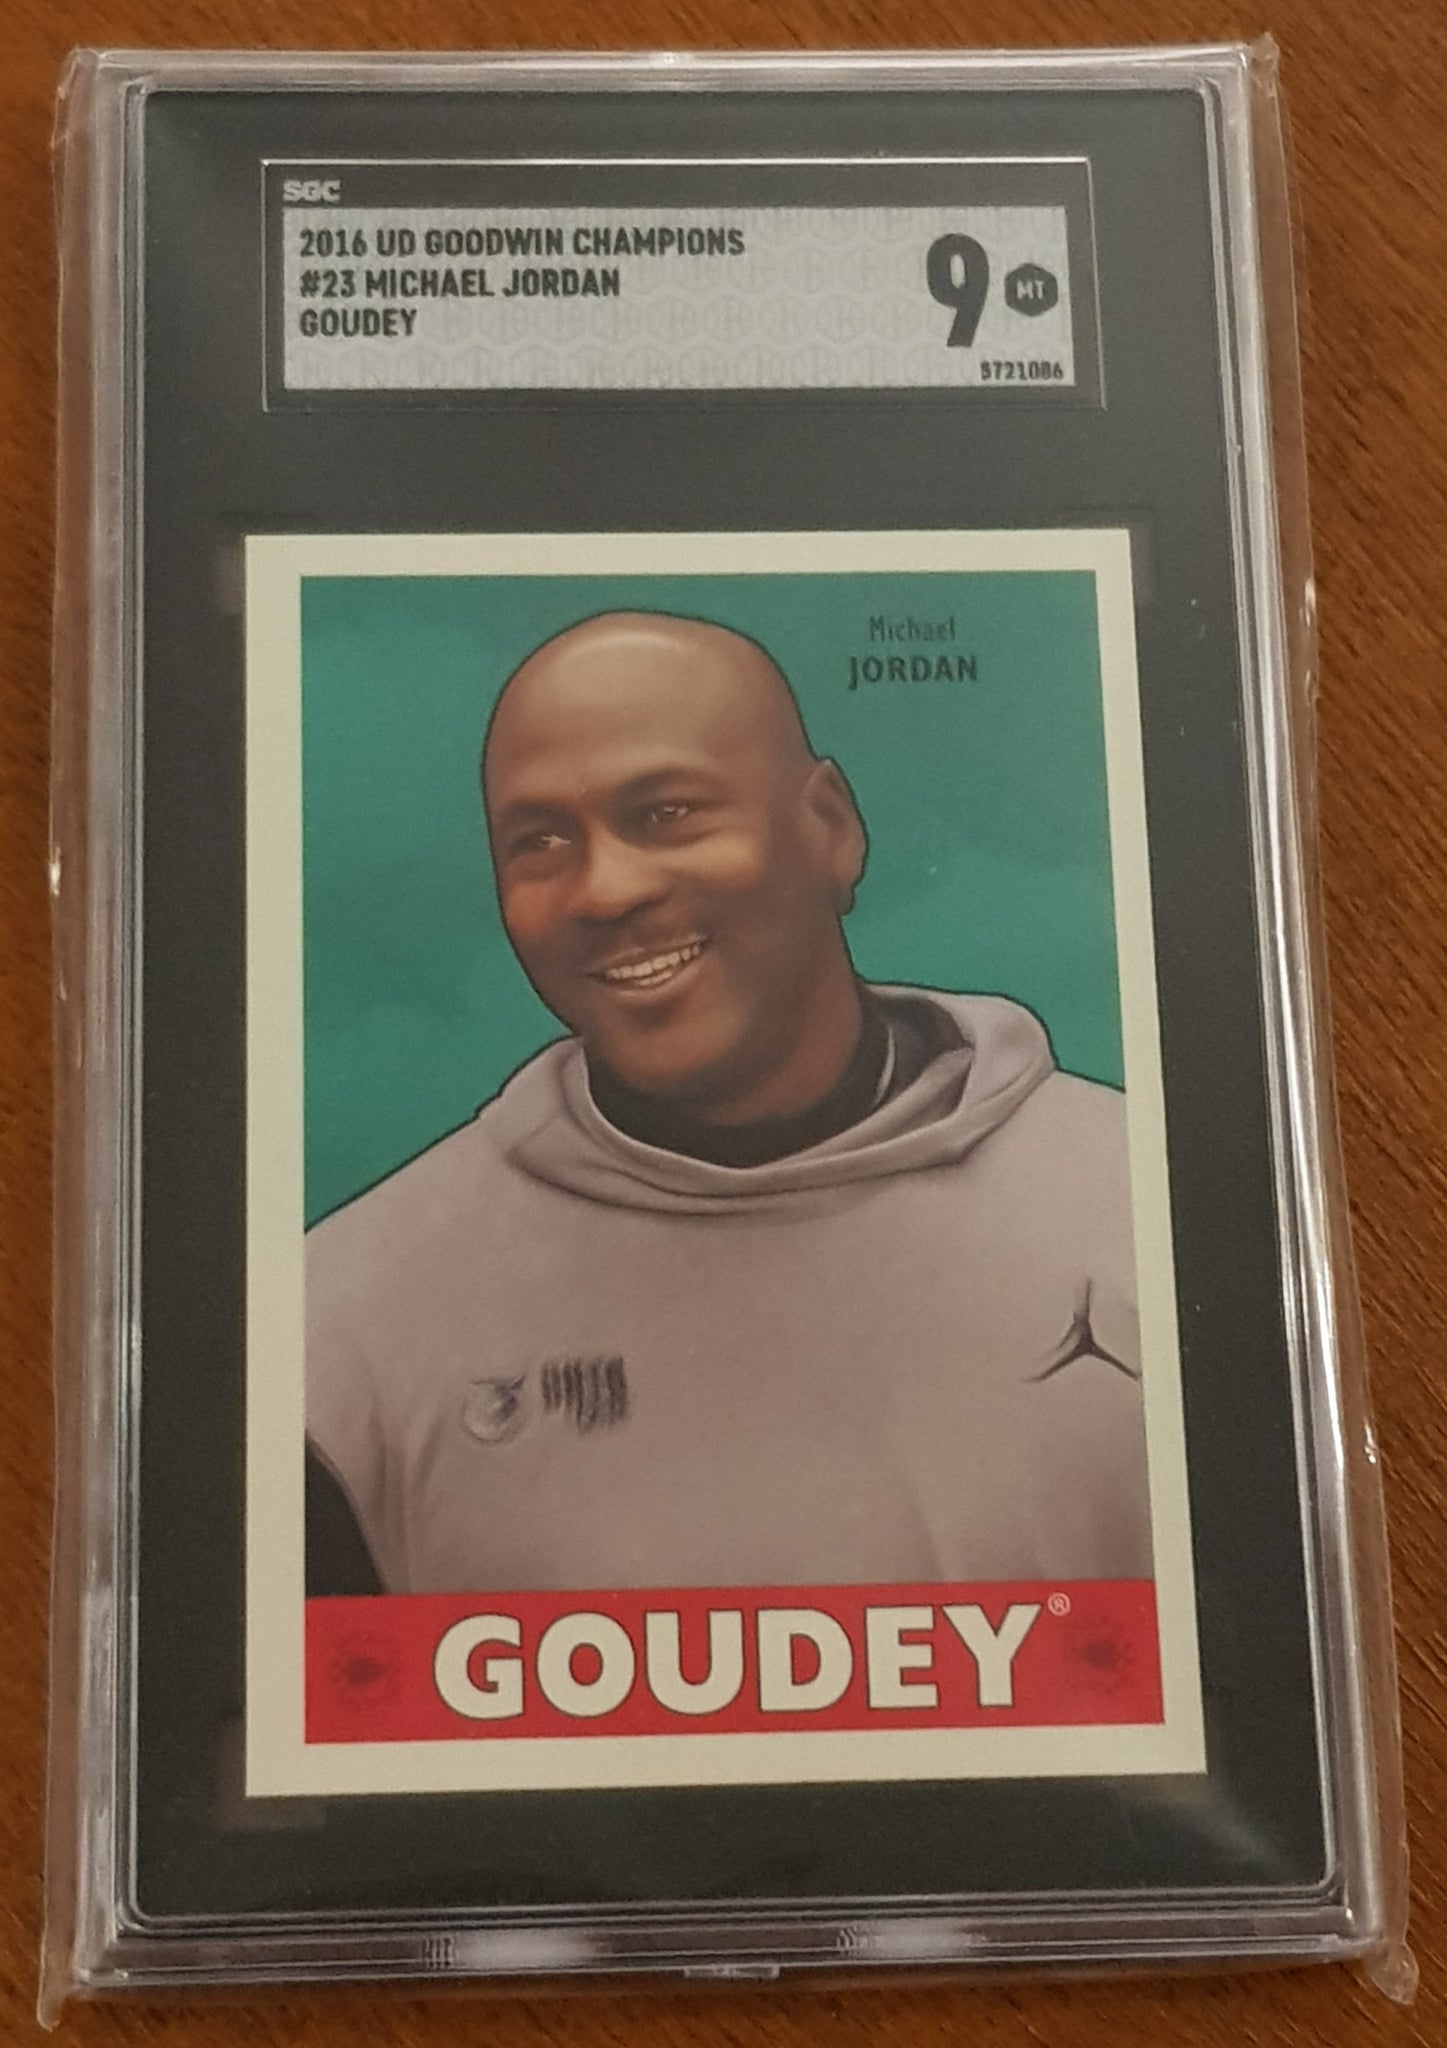 2016 Upper Deck Goodwin Champions Goudey Michael Jordan #23 SGC 9 Trading Card